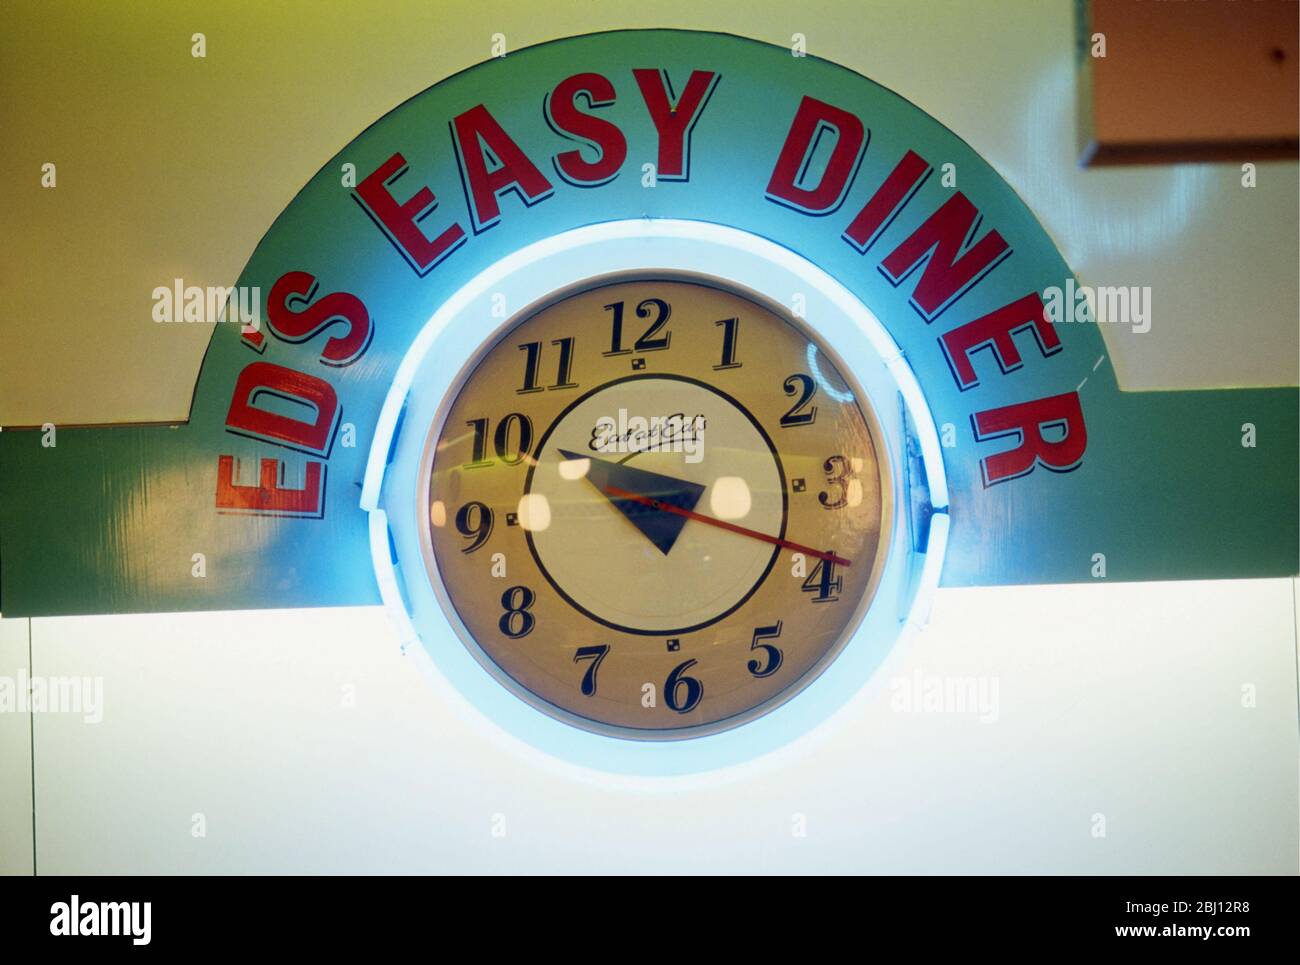 Ed's Easy Diner - Foto de stock